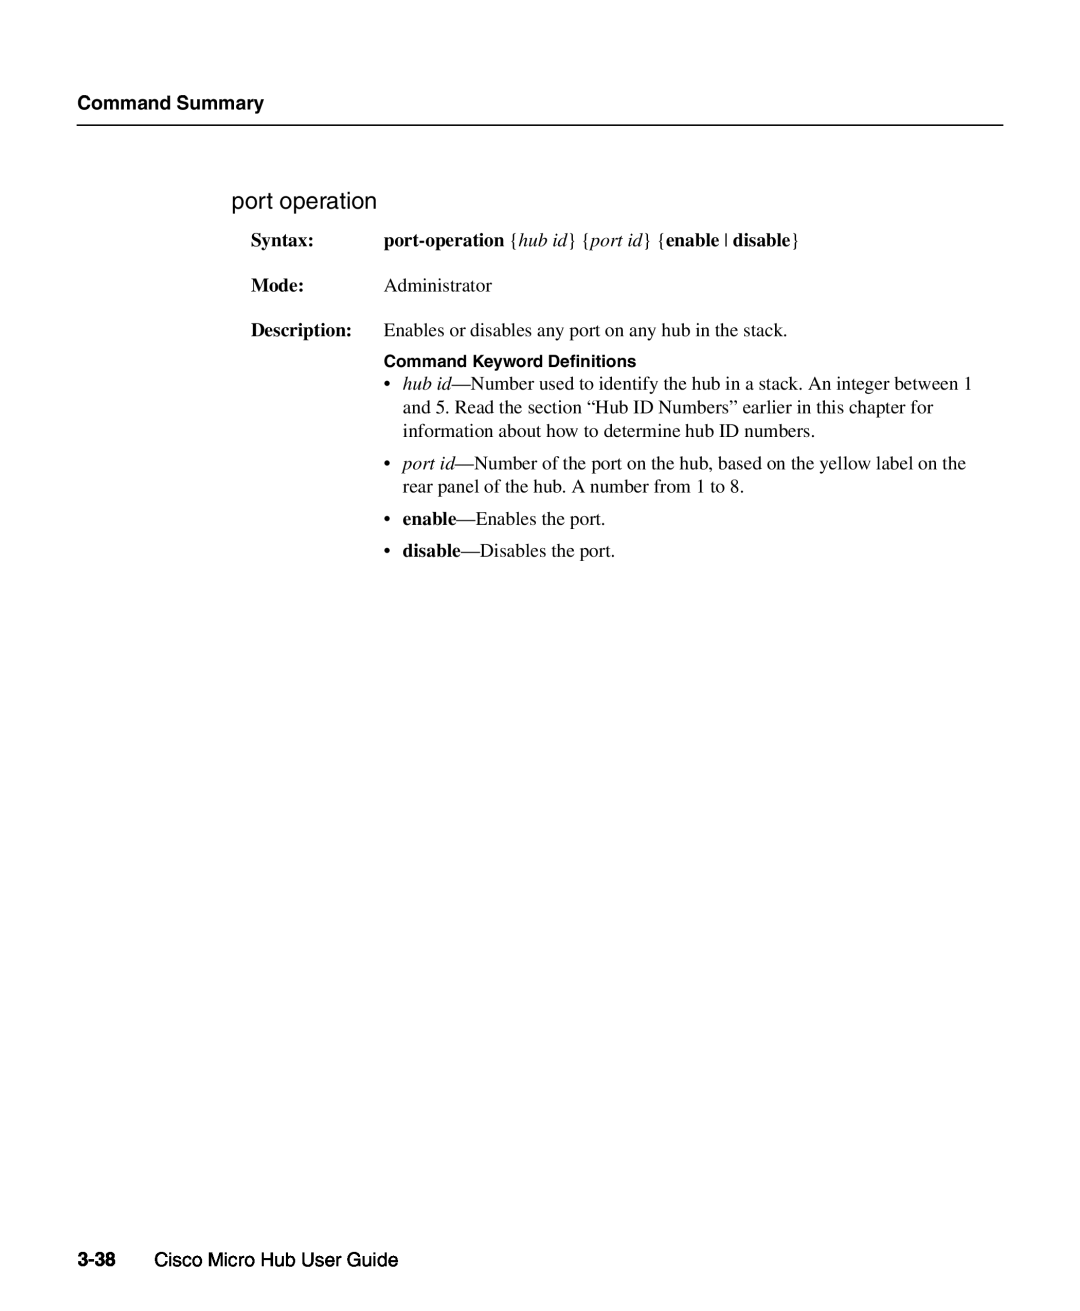 Cisco Systems 1503 manual port operation, Command Summary, Cisco Micro Hub User Guide 